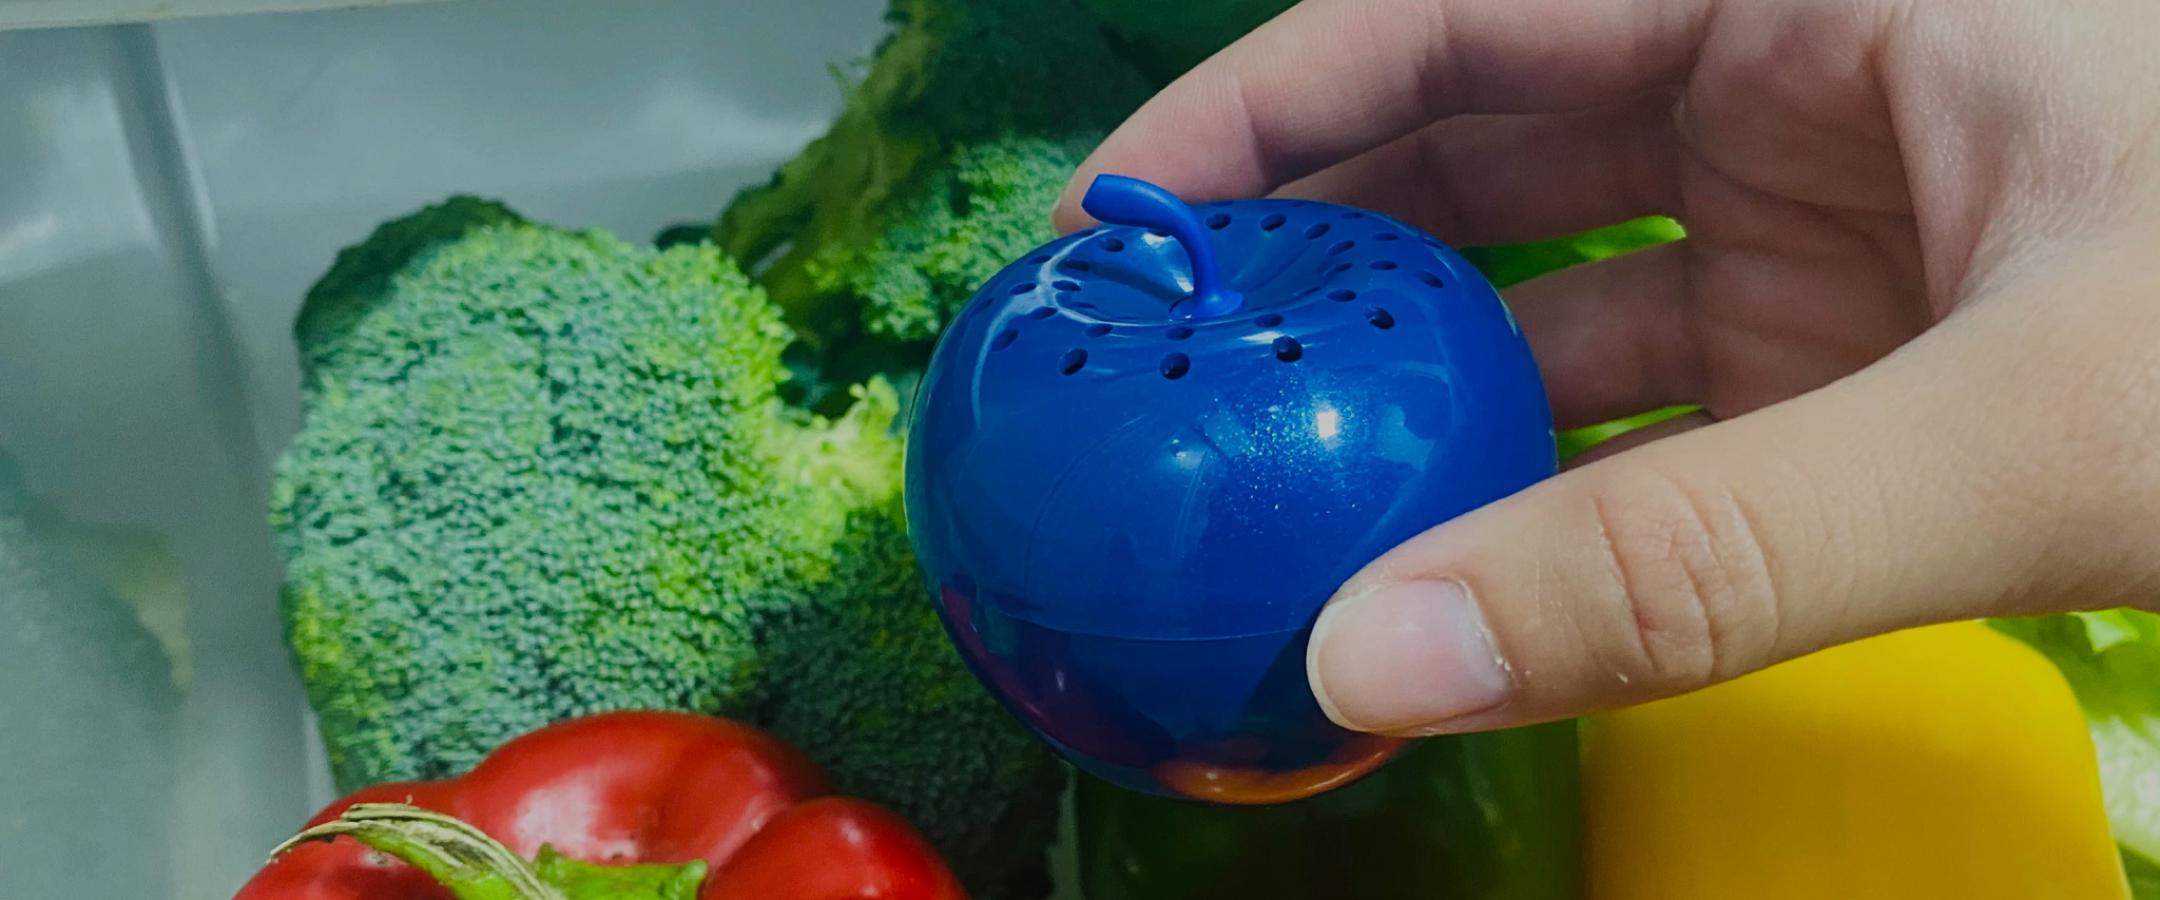 Bluapple Produce Saver 2-Pack - Keeps Fruits & Vegetables Fresh